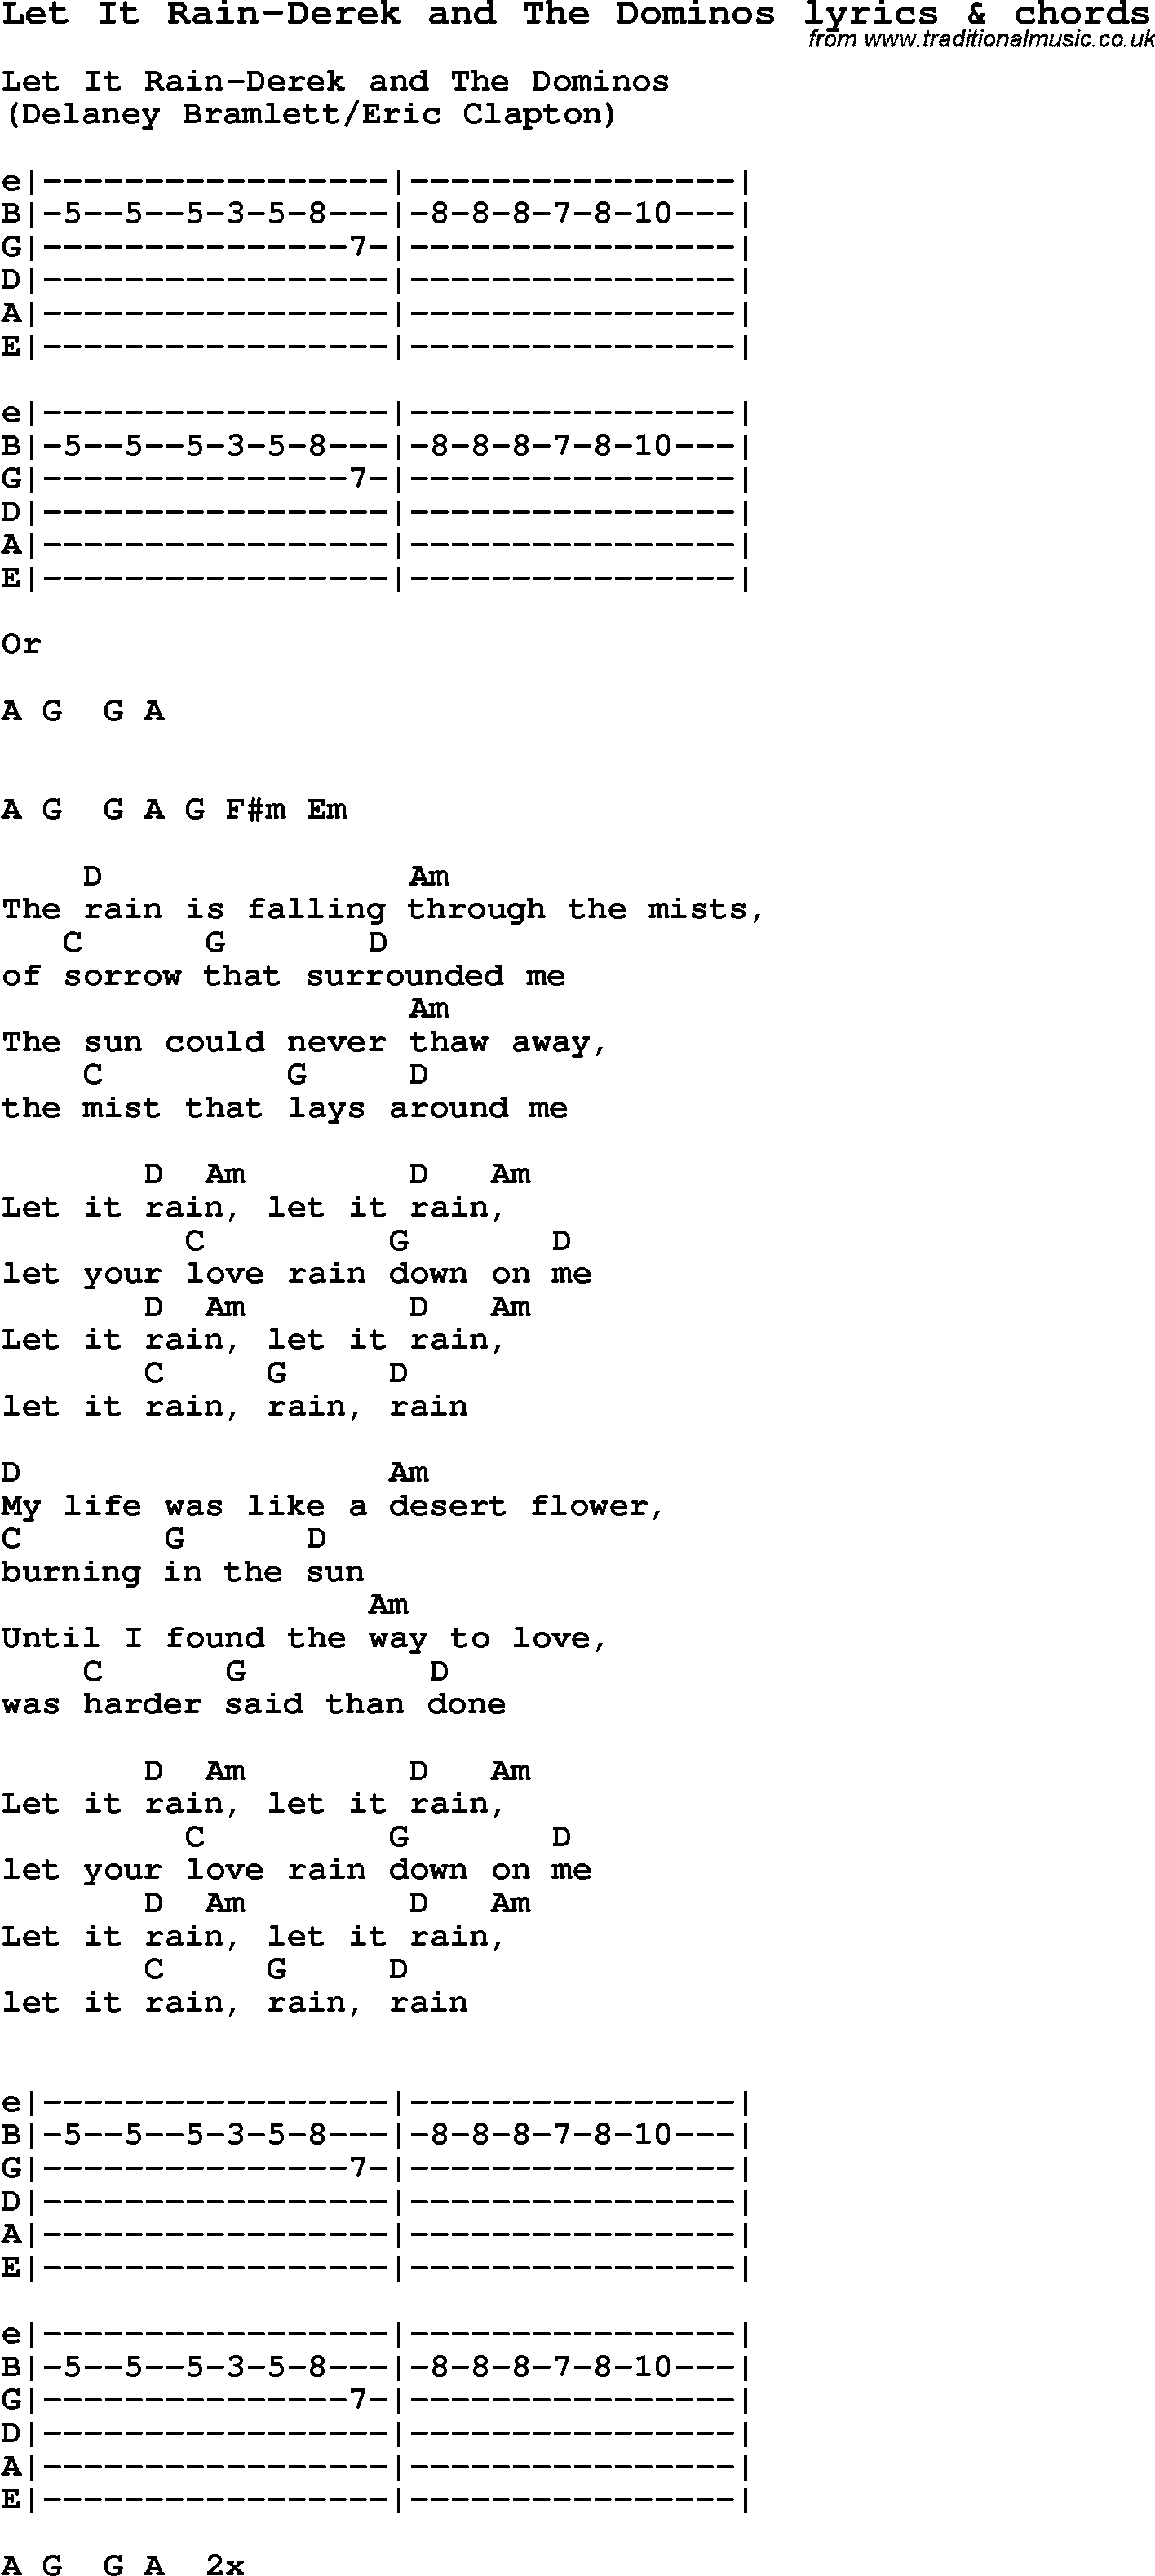 Love Song Lyrics for: Let It Rain-Derek and The Dominos with chords for Ukulele, Guitar Banjo etc.